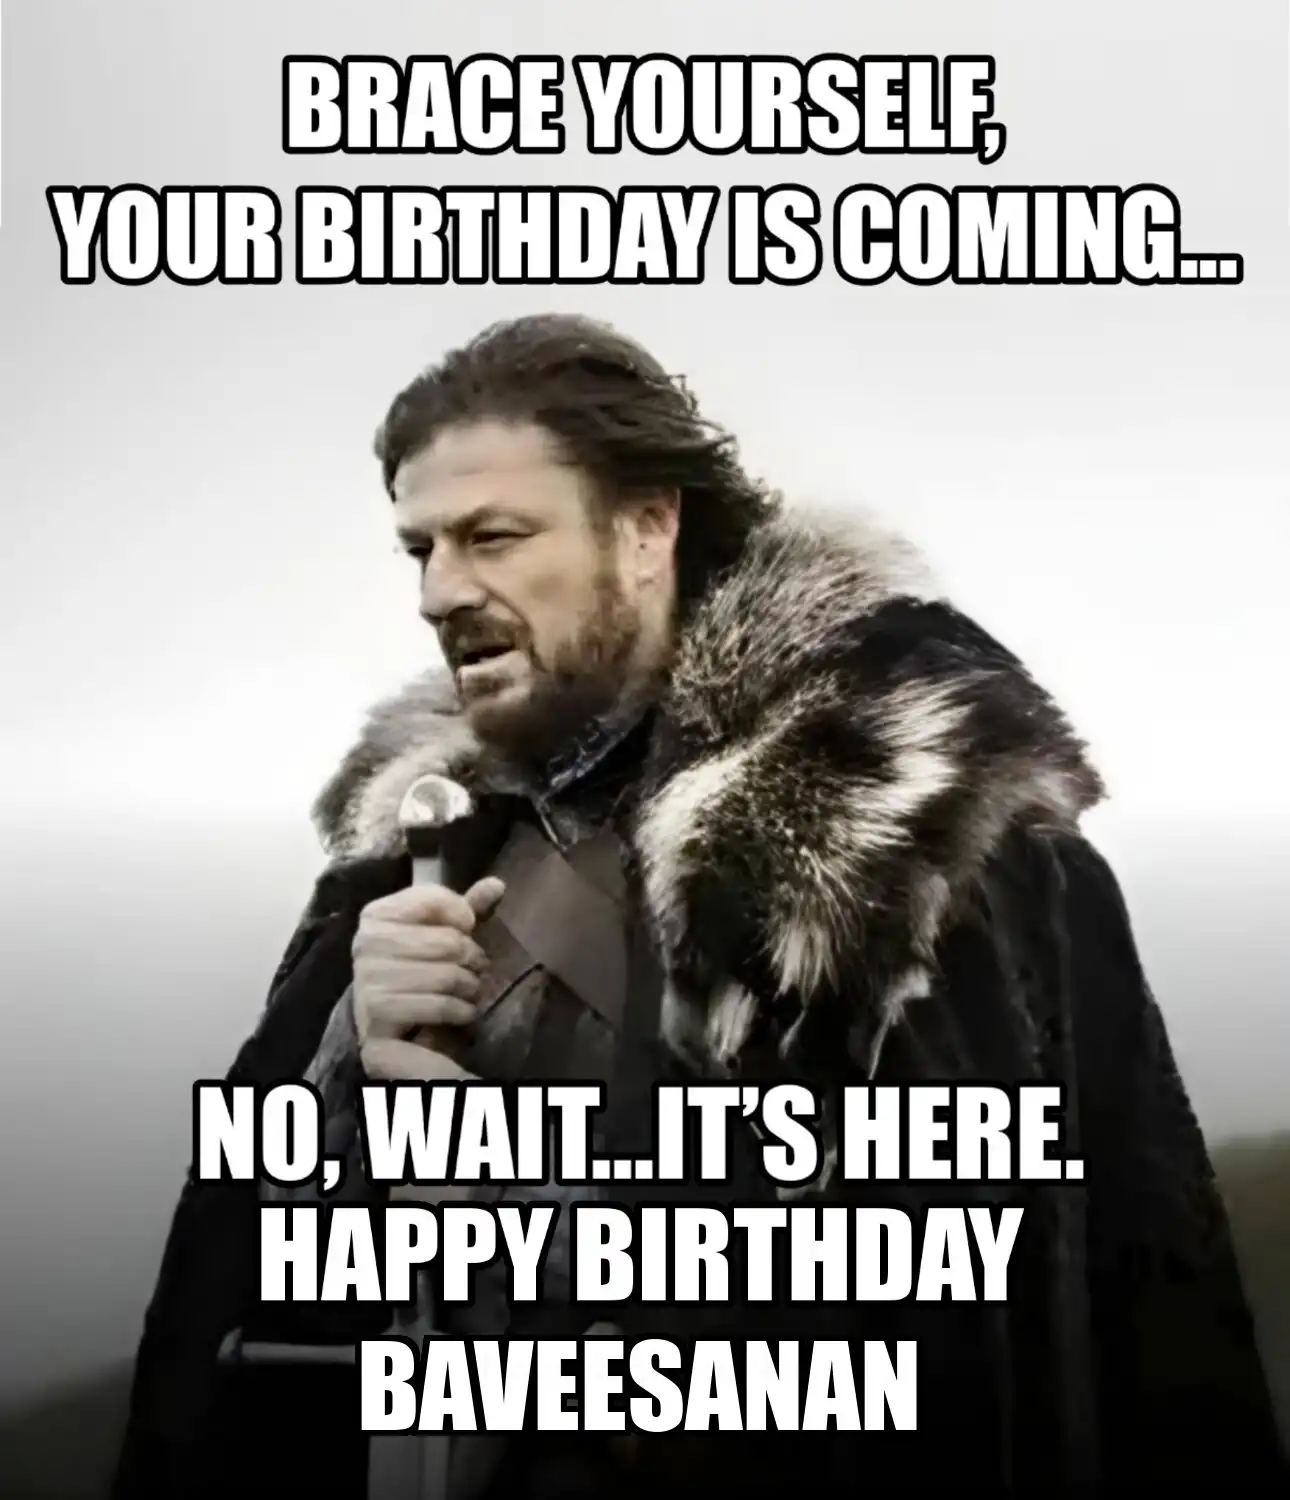 Happy Birthday Baveesanan Brace Yourself Your Birthday Is Coming Meme